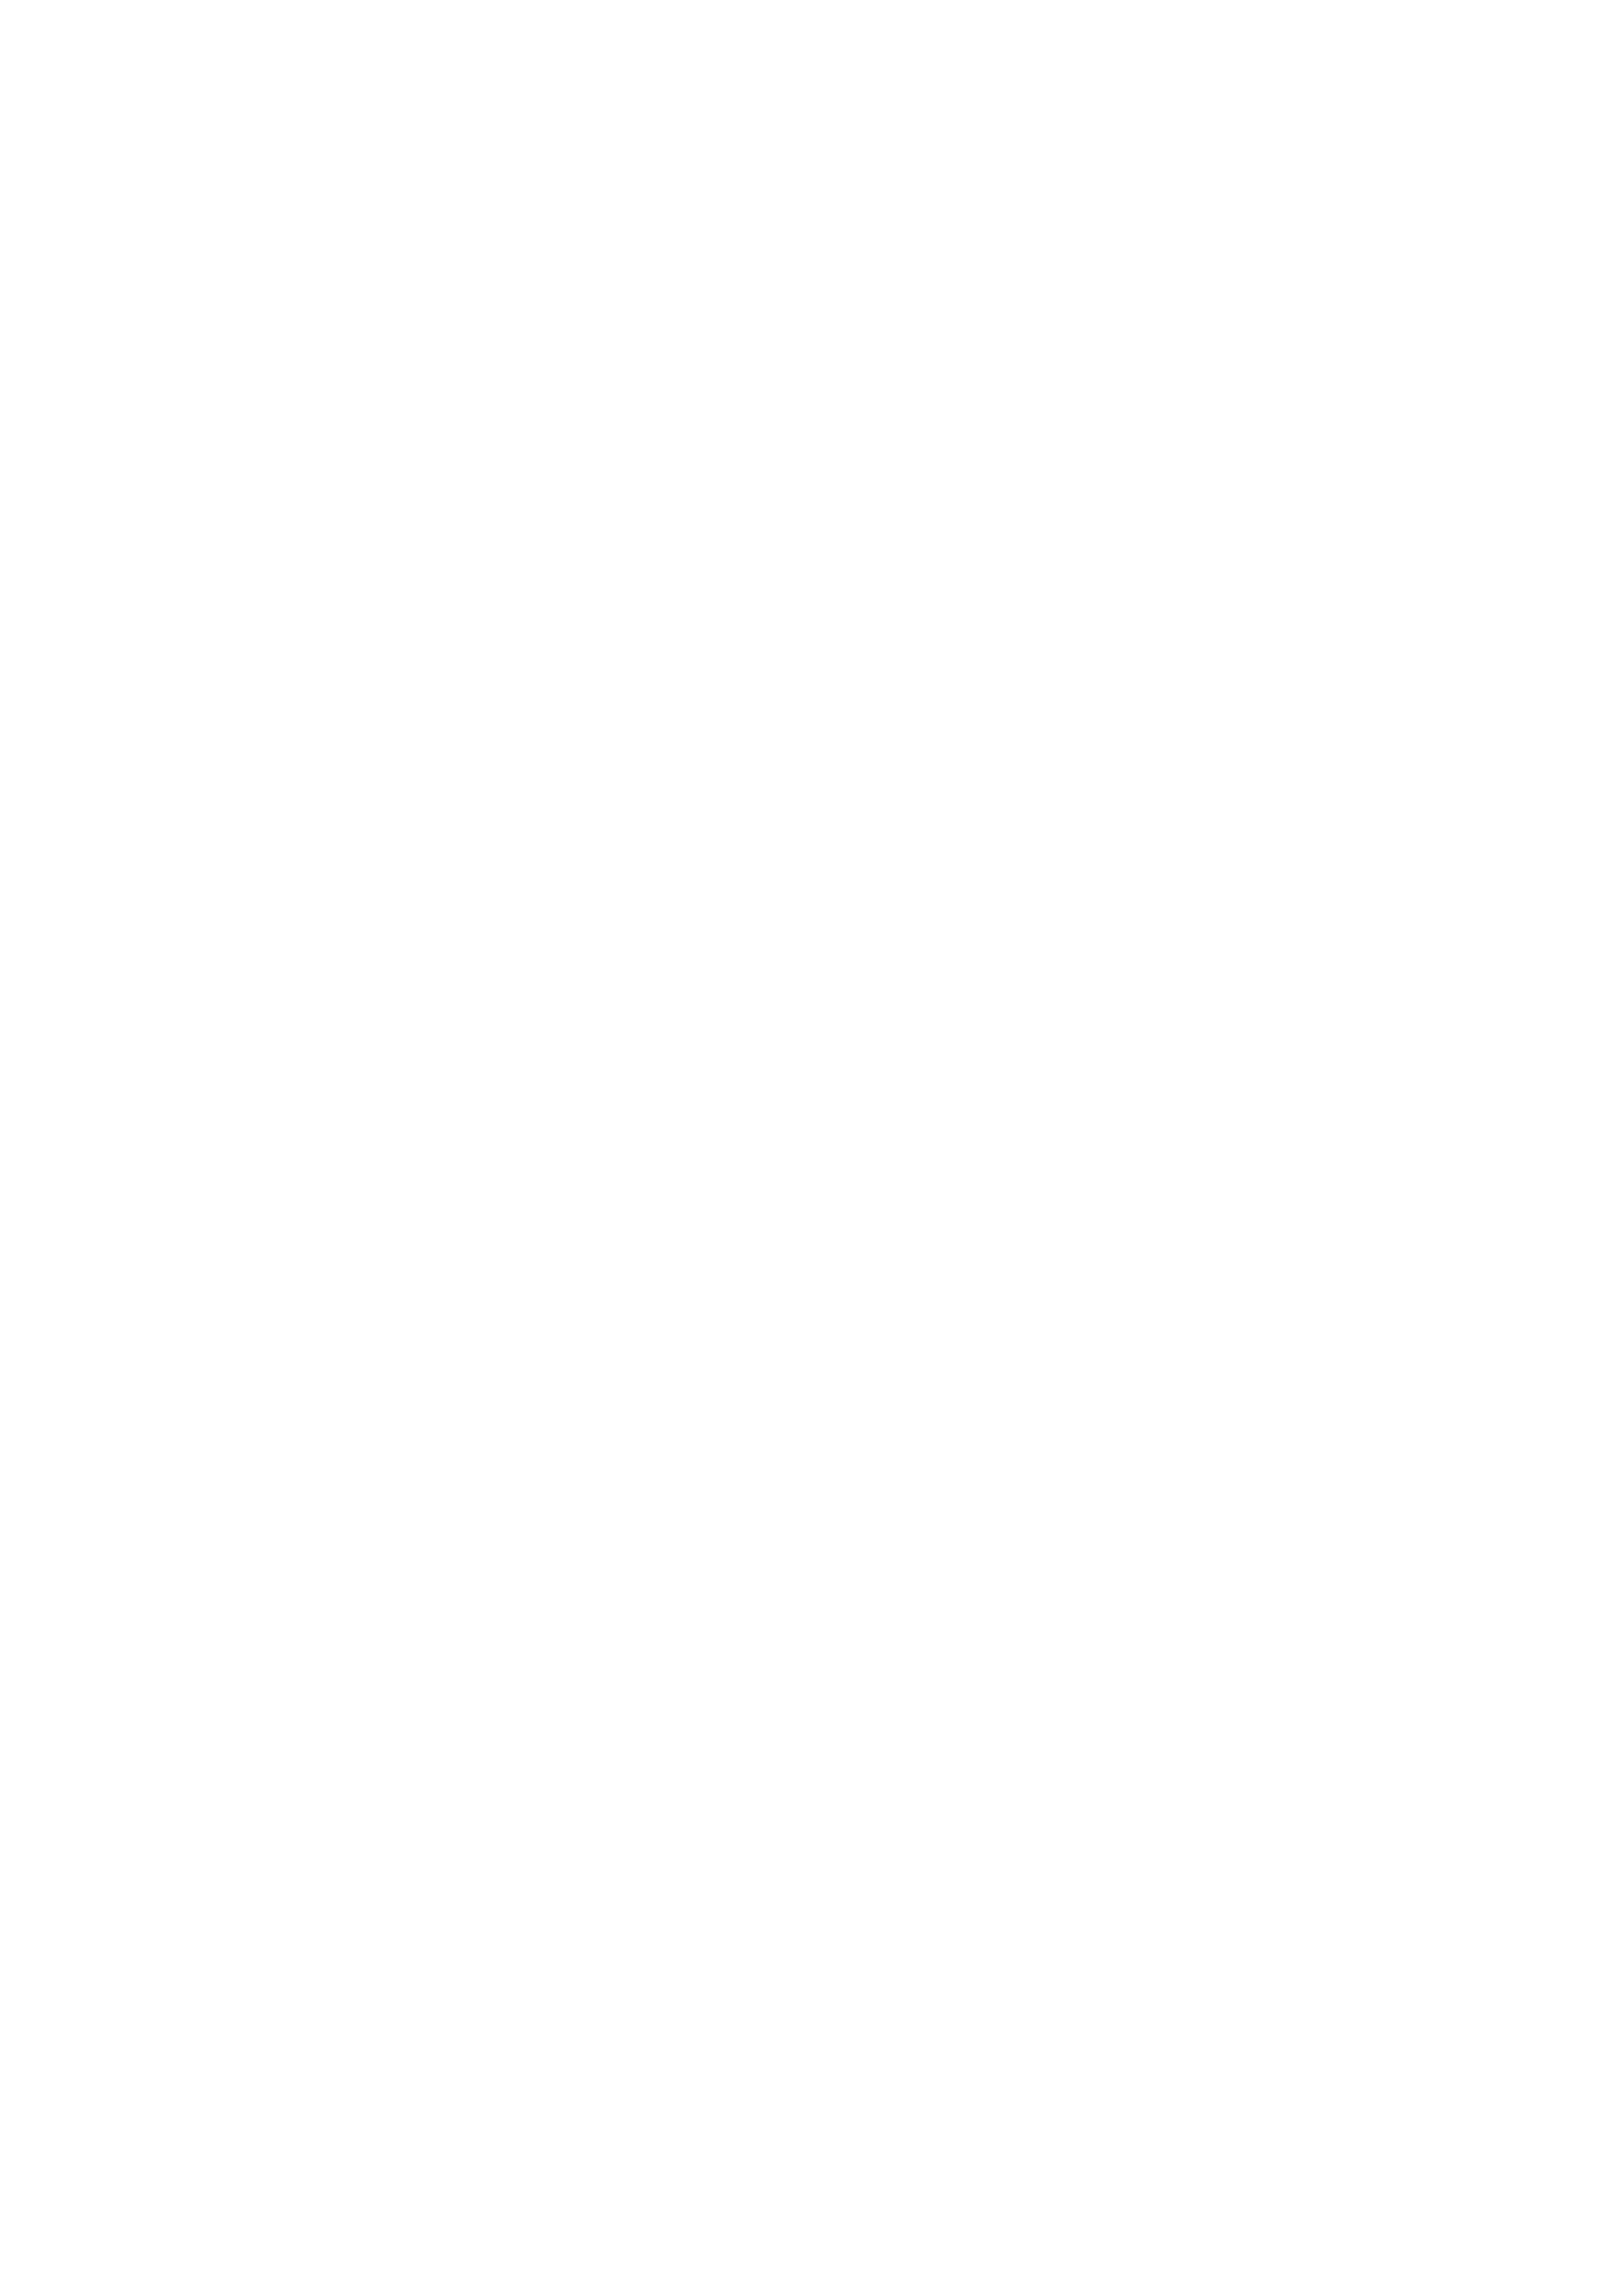 MH Goals